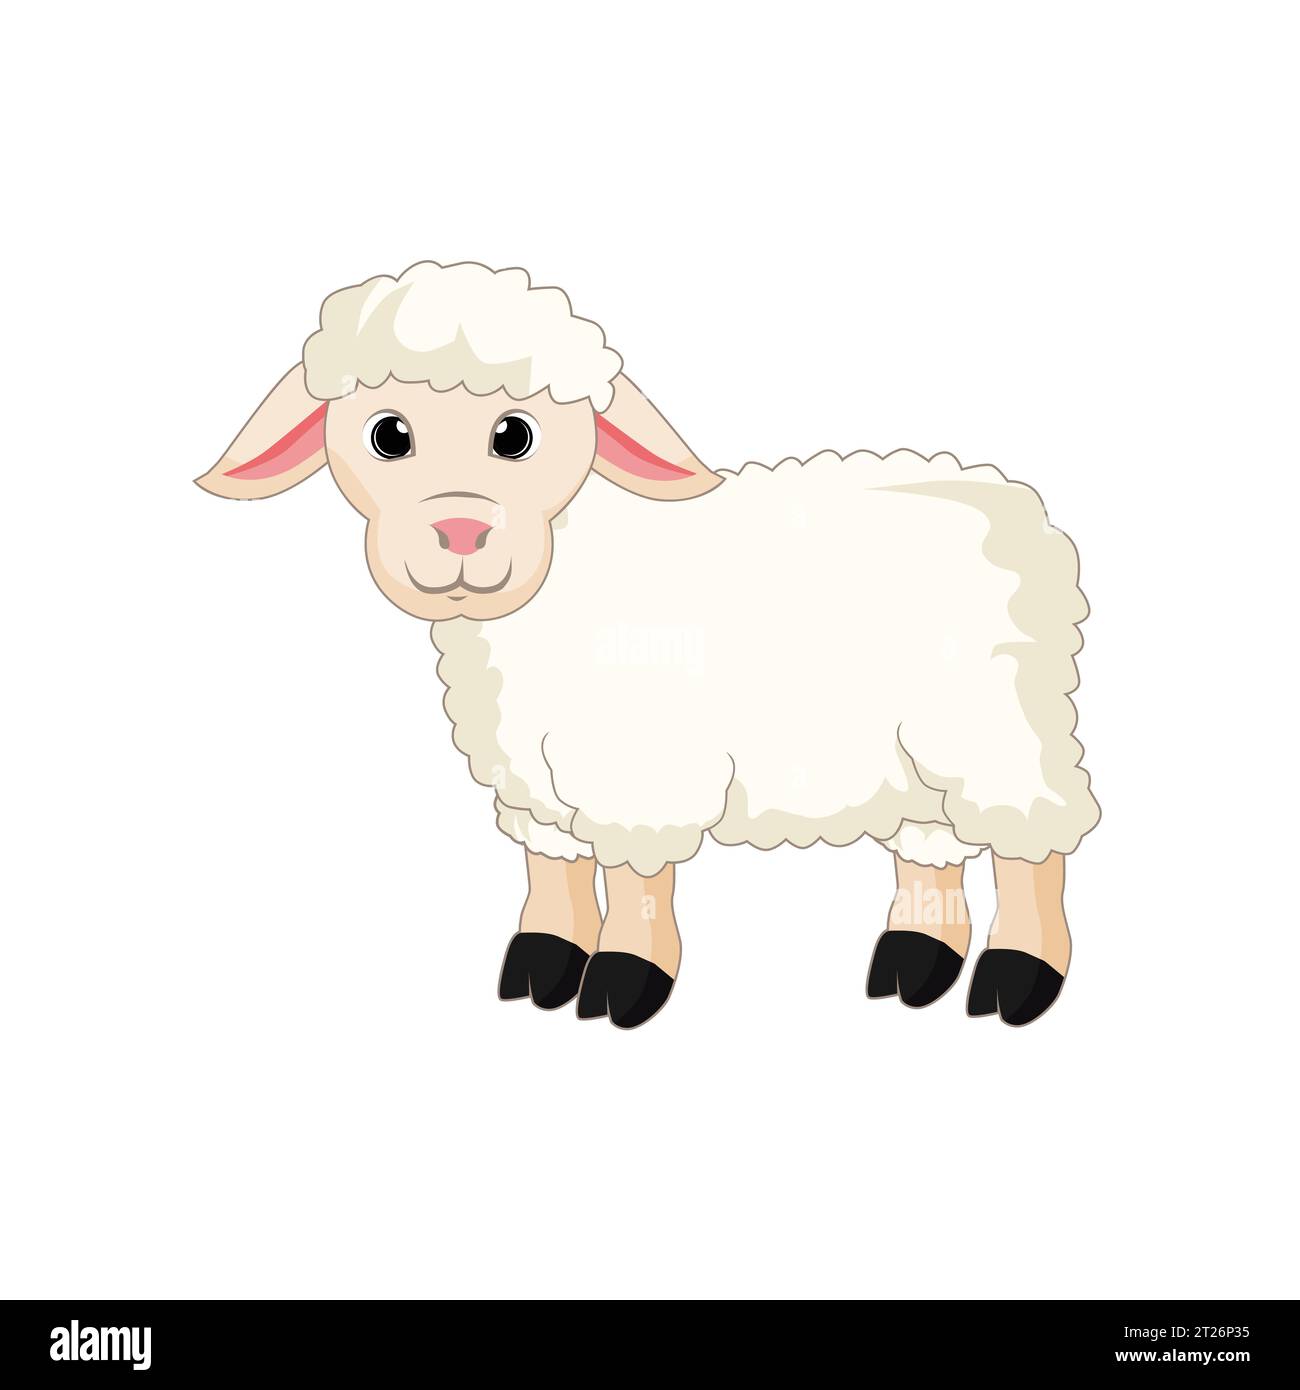 Cute Sheep Cartoon Vector Art on white background Stock Vector